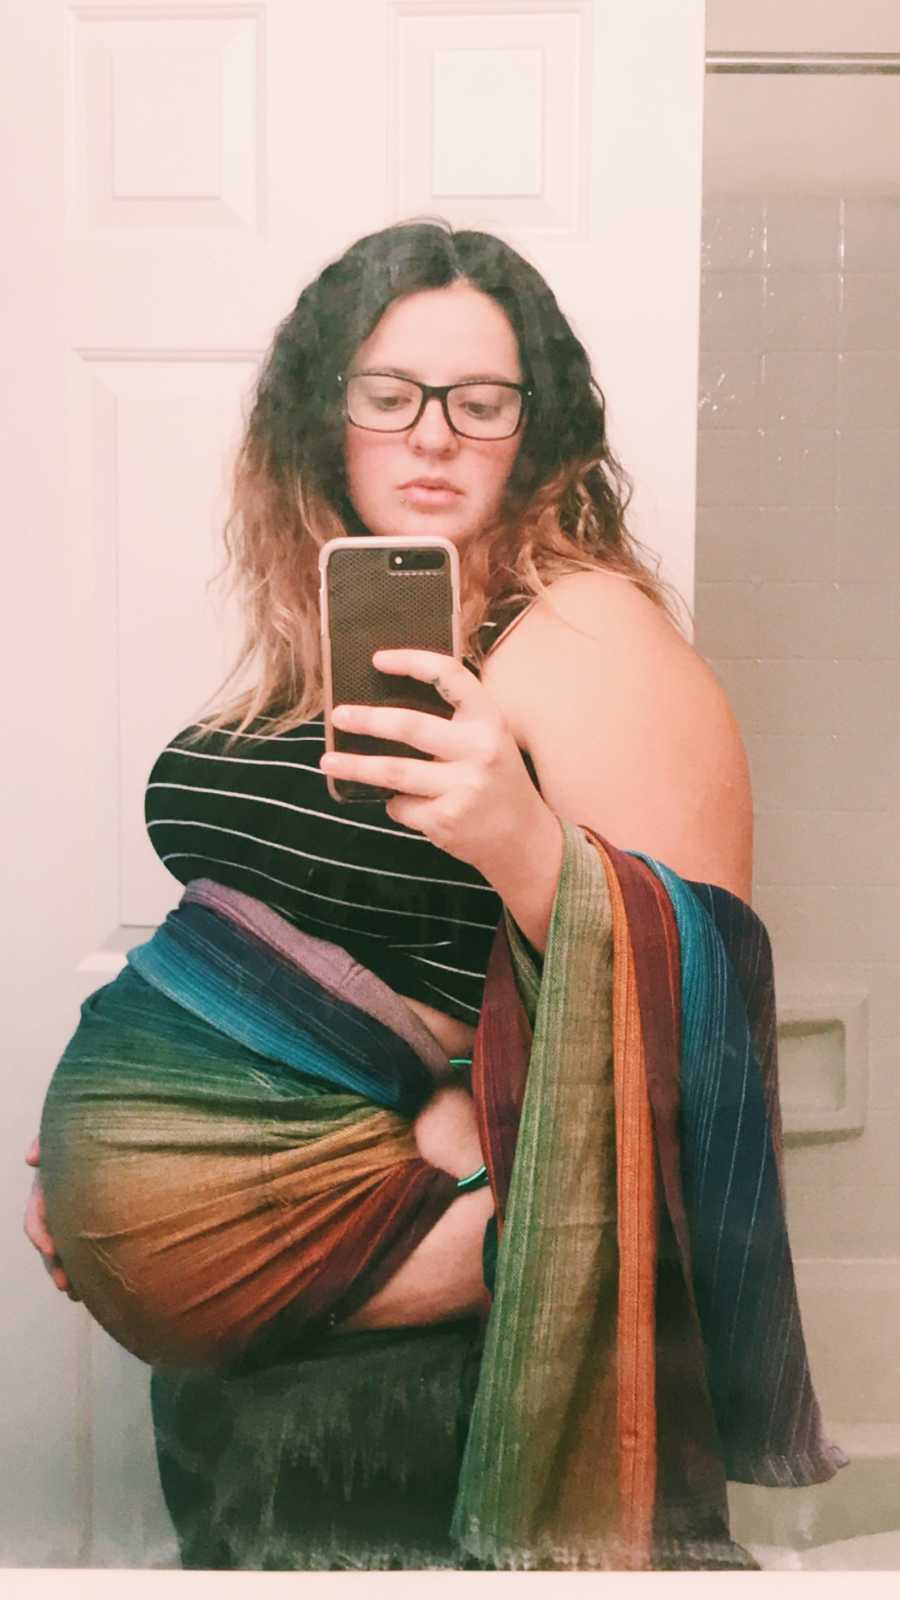 Pregnant woman stands in bathroom taking mirror selfie